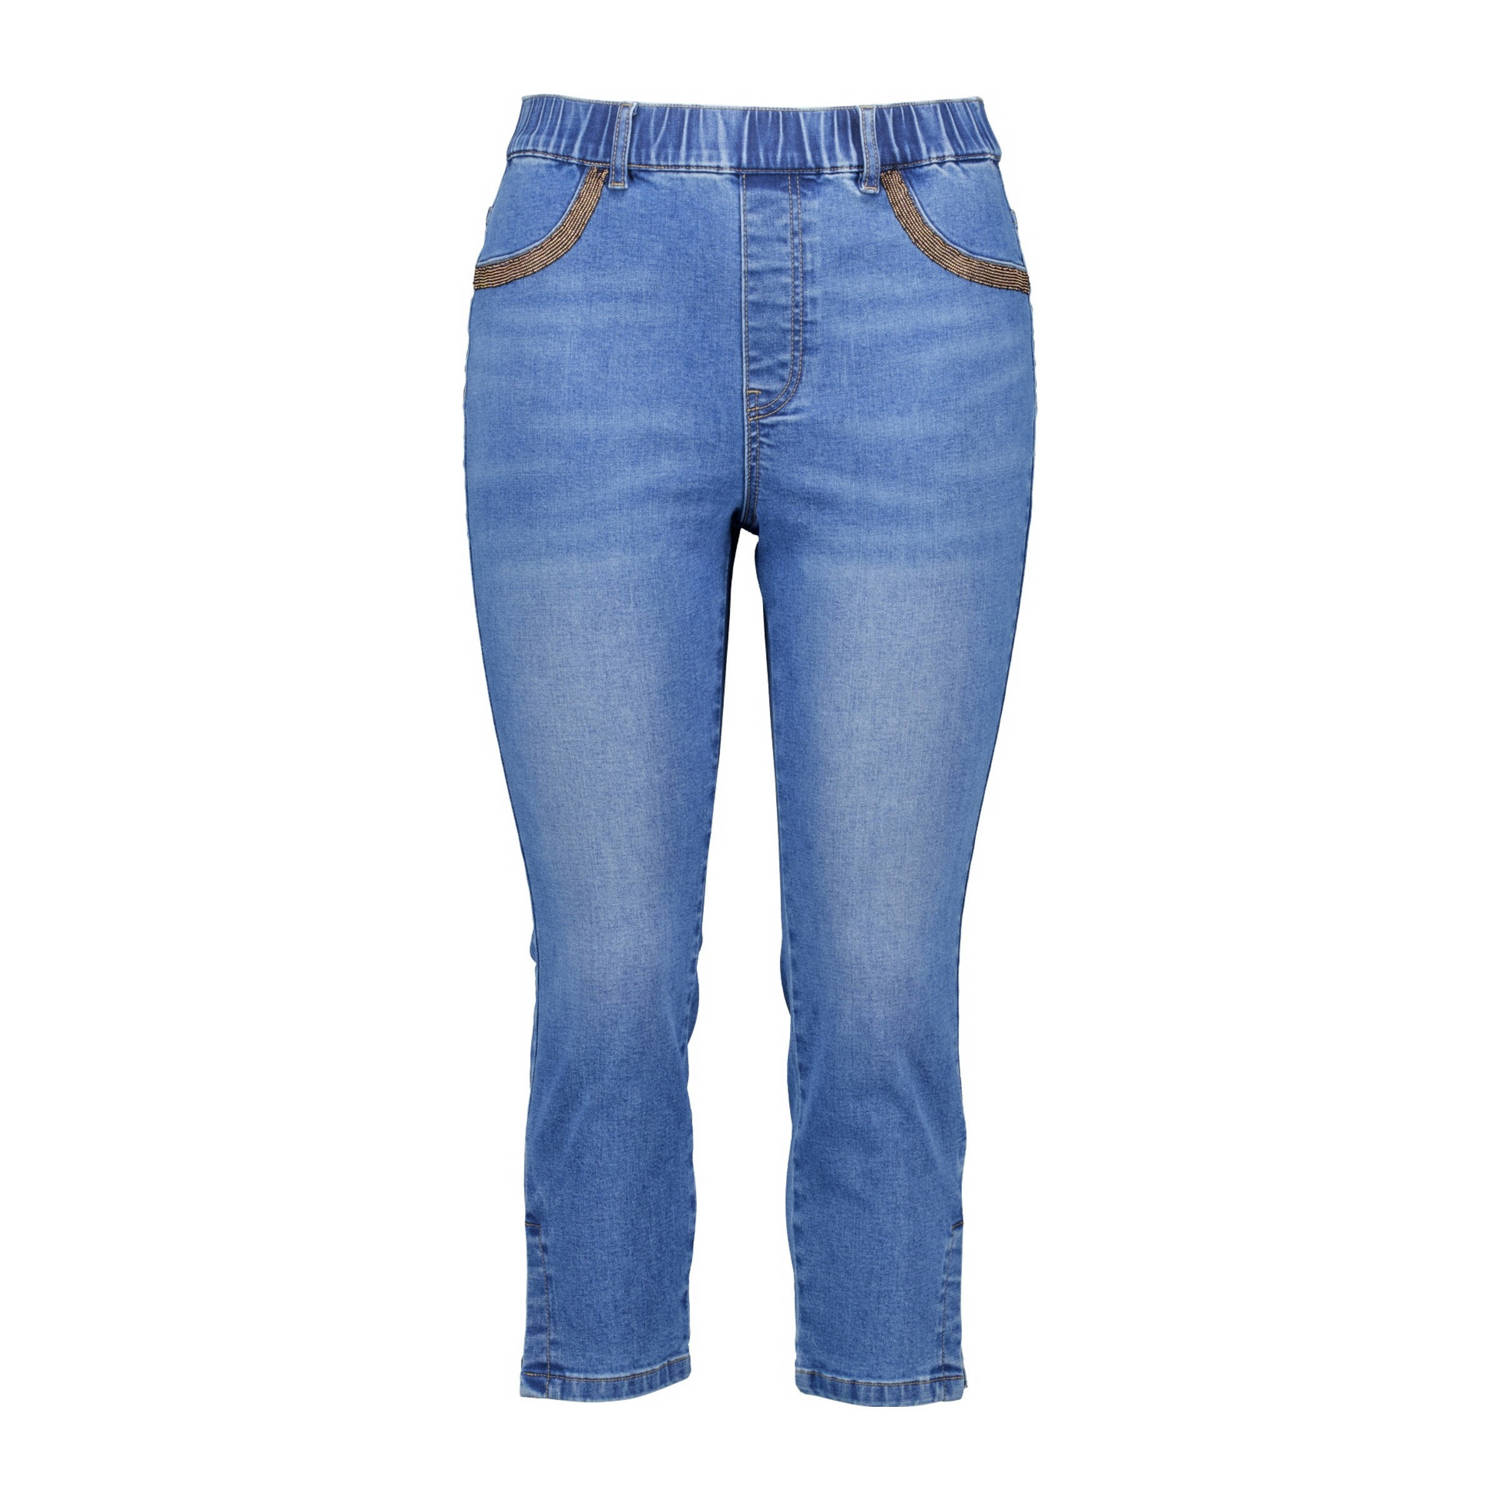 MS Mode capri jeans medium blue denim